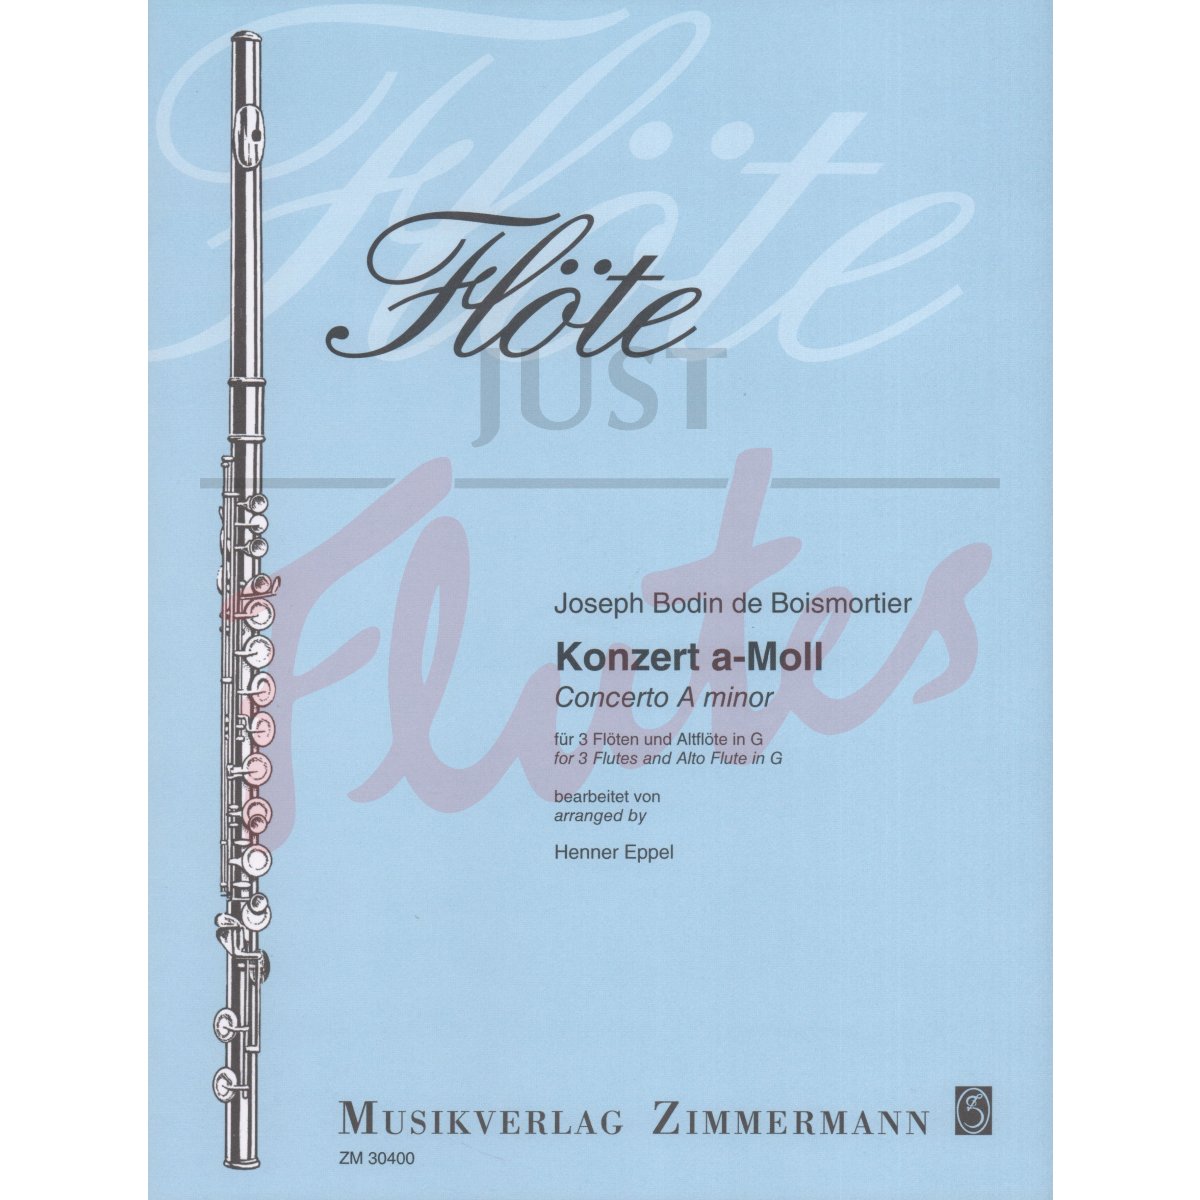 Concerto in A minor for Three Flutes and Alto Flute